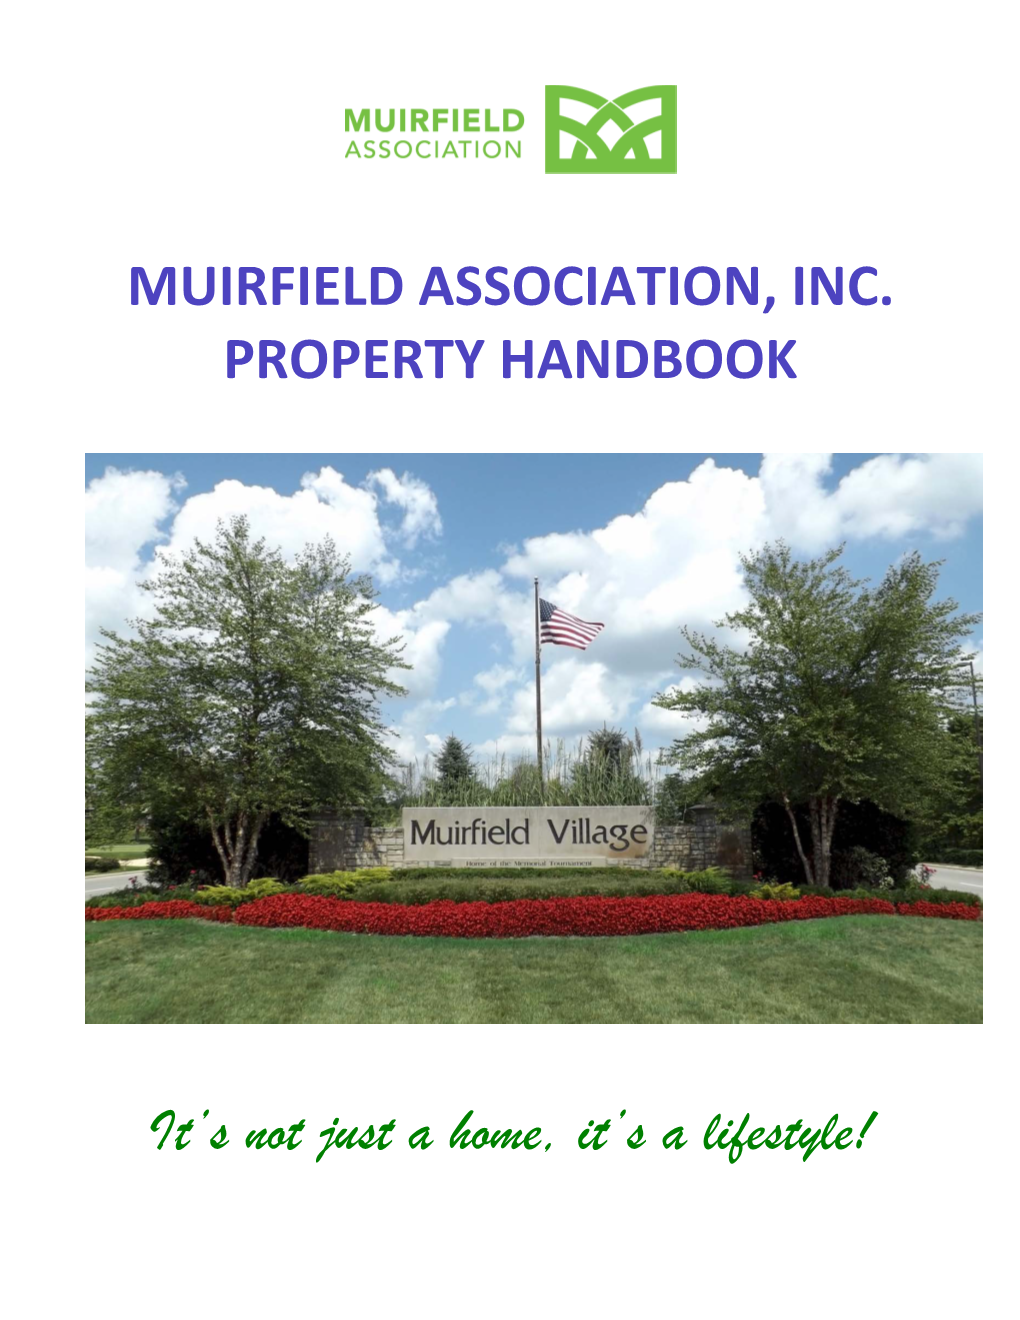 Muirfield Association, Inc. Property Handbook